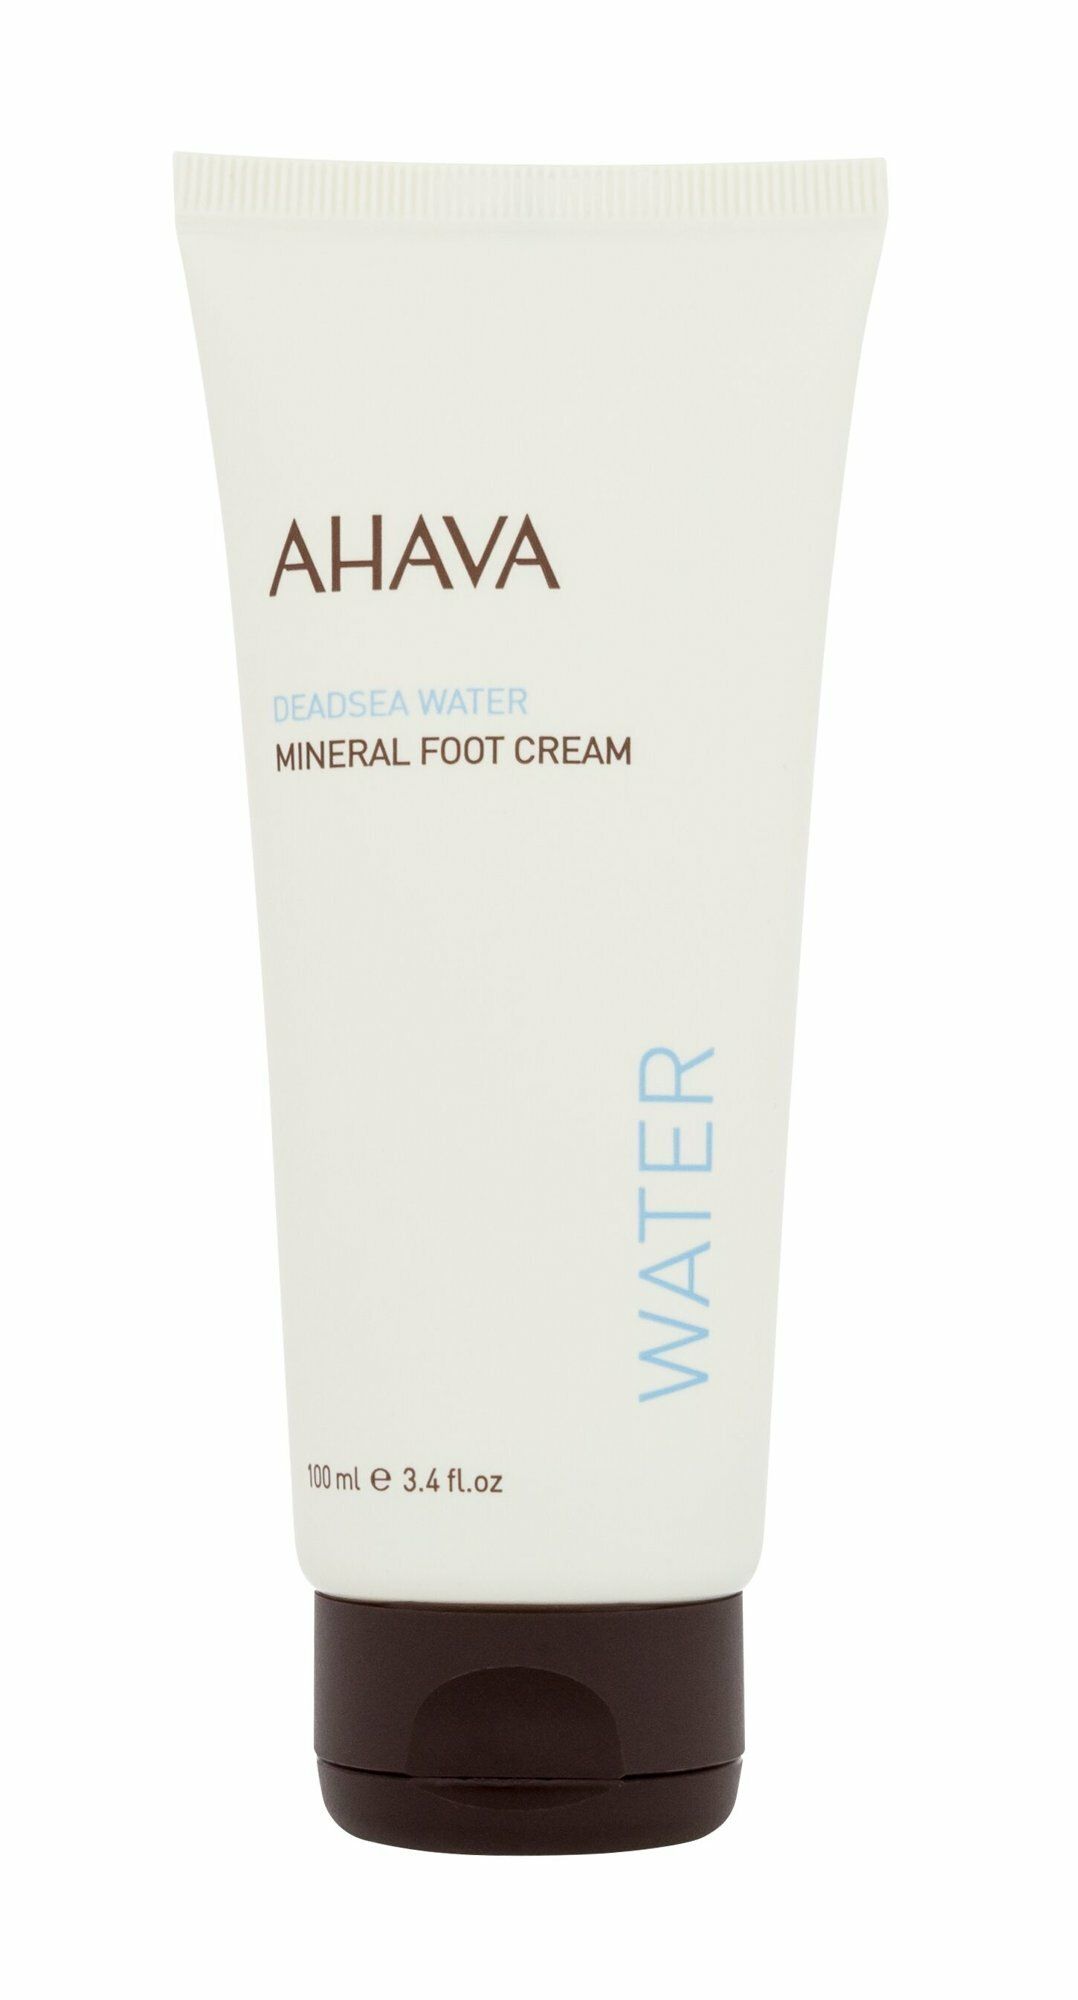 AHAVA DEADSEA WATER Mineral Foot Cream